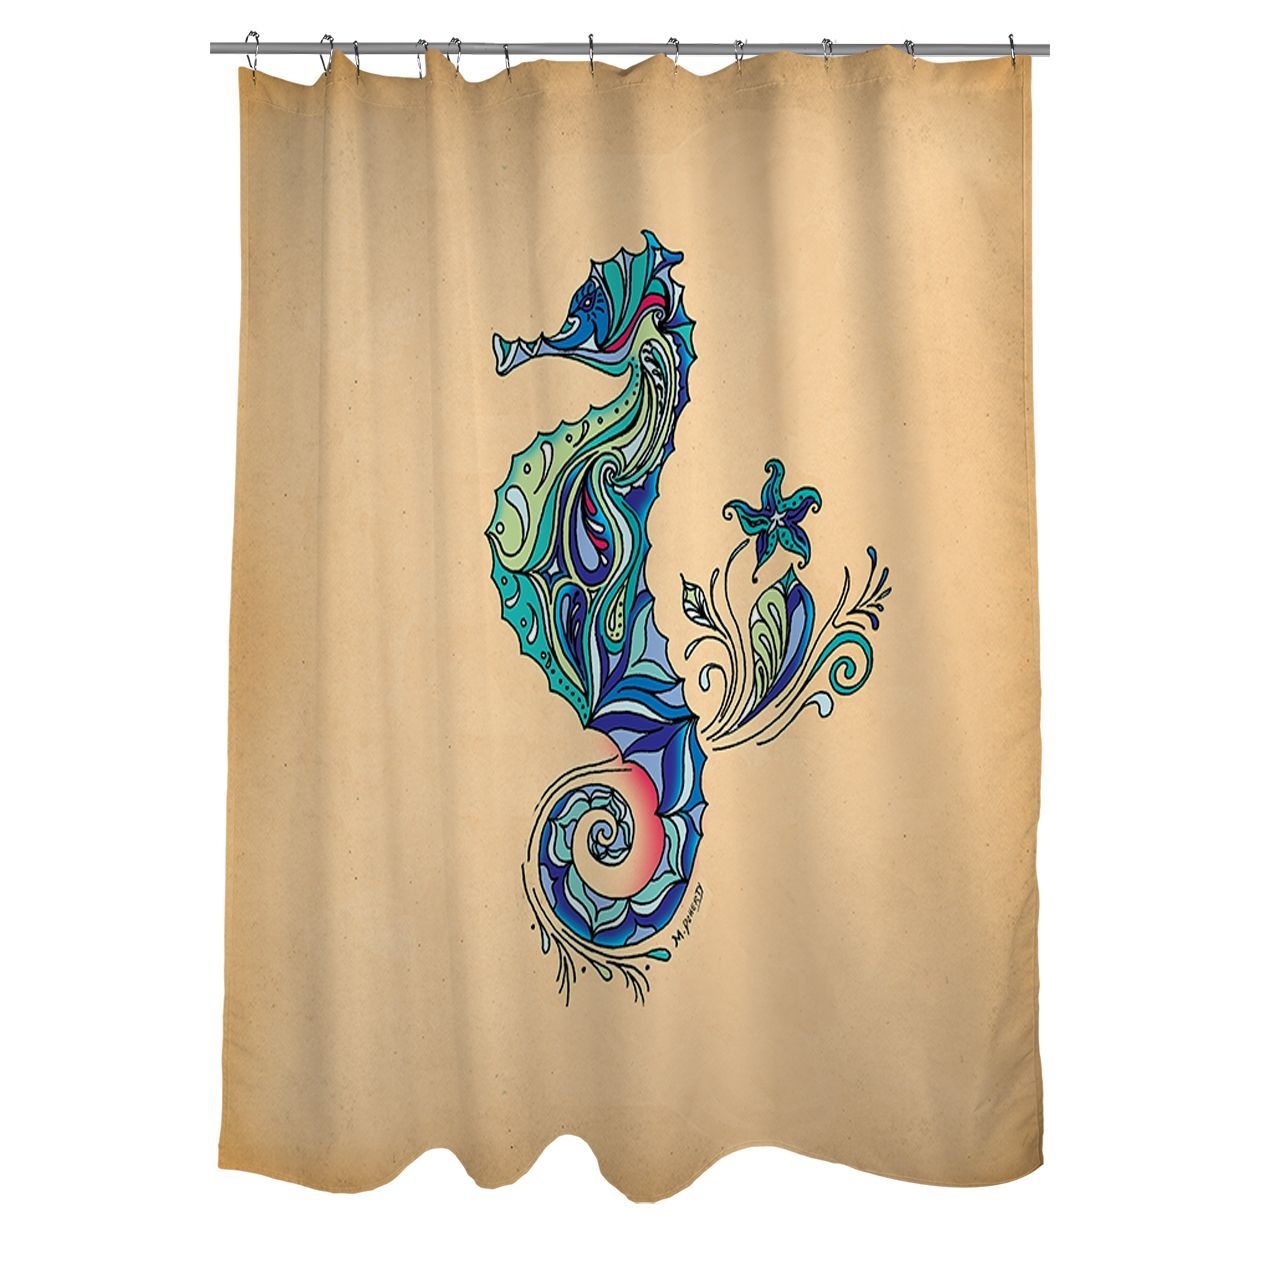 Thumbprintz seahorse shower curtain